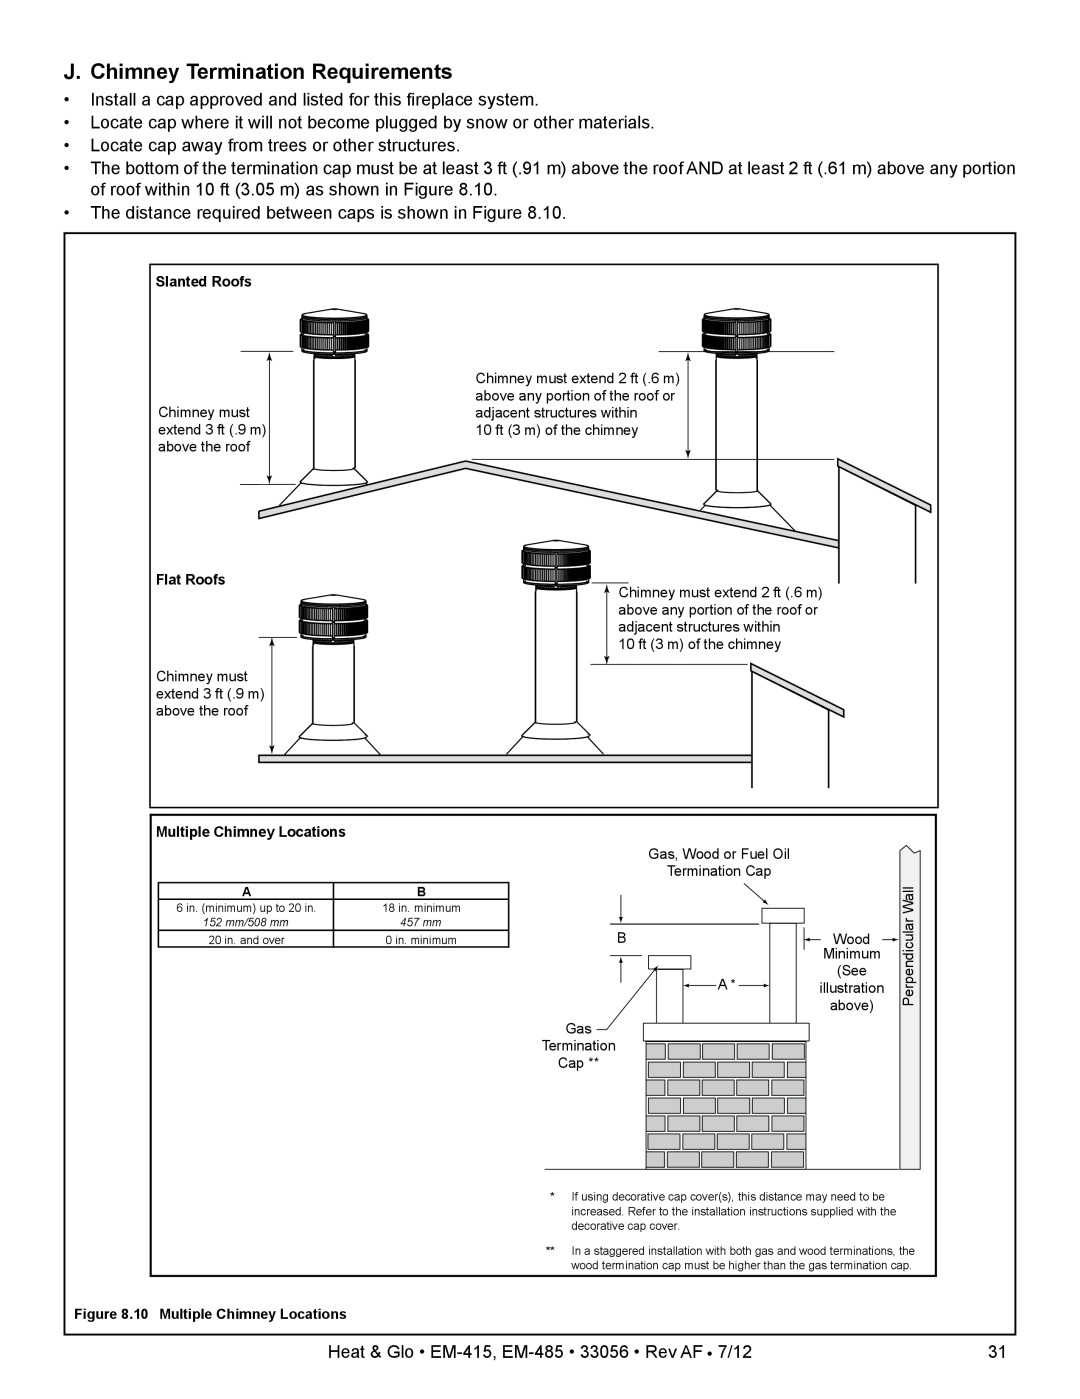 Heat & Glo LifeStyle EM-485T - 42, EM-415 - 36 owner manual J. Chimney Termination Requirements 